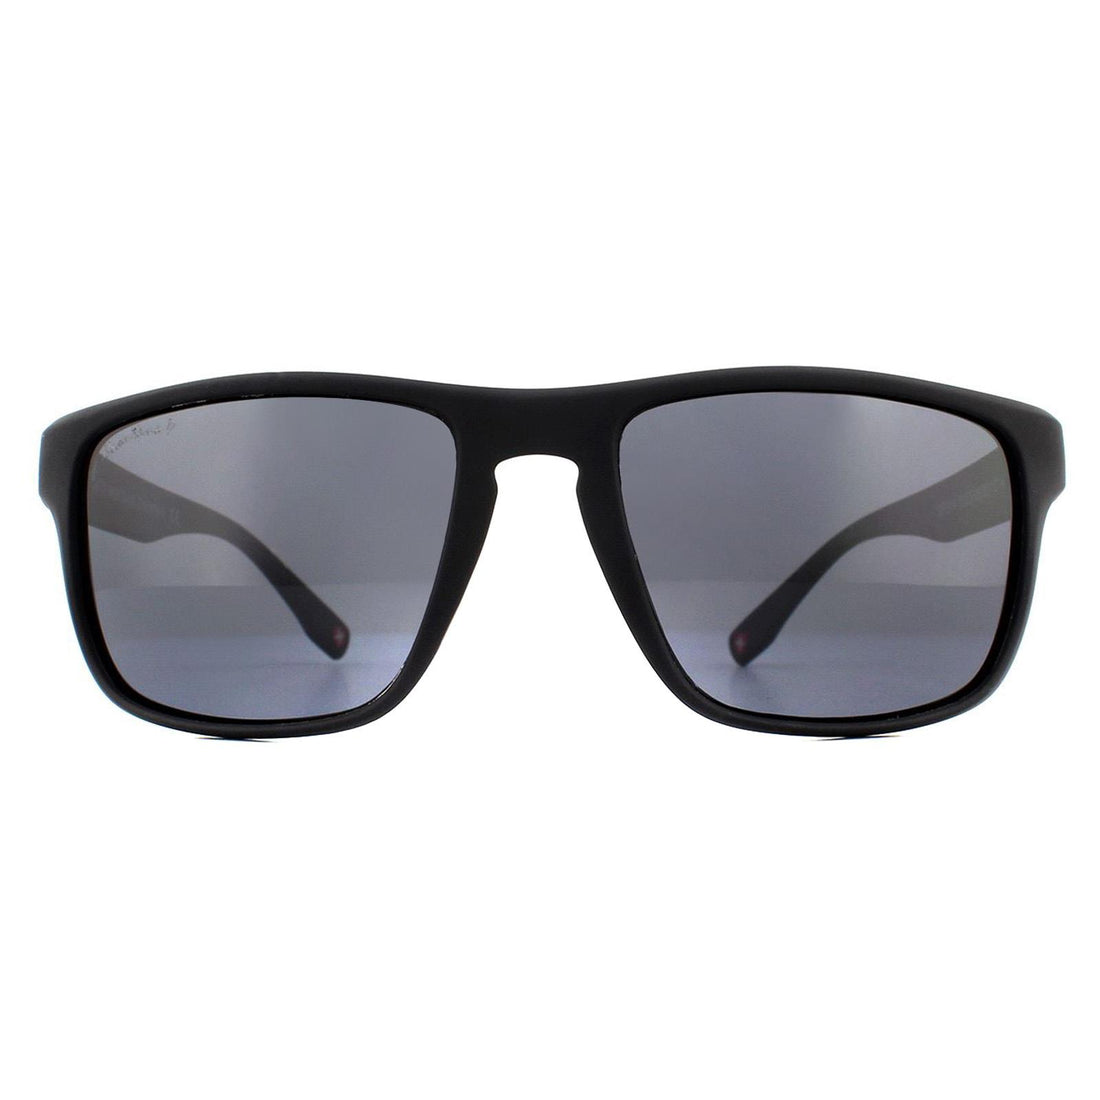 Montana SP314 Sunglasses Black Rubber / Smoke Polarized